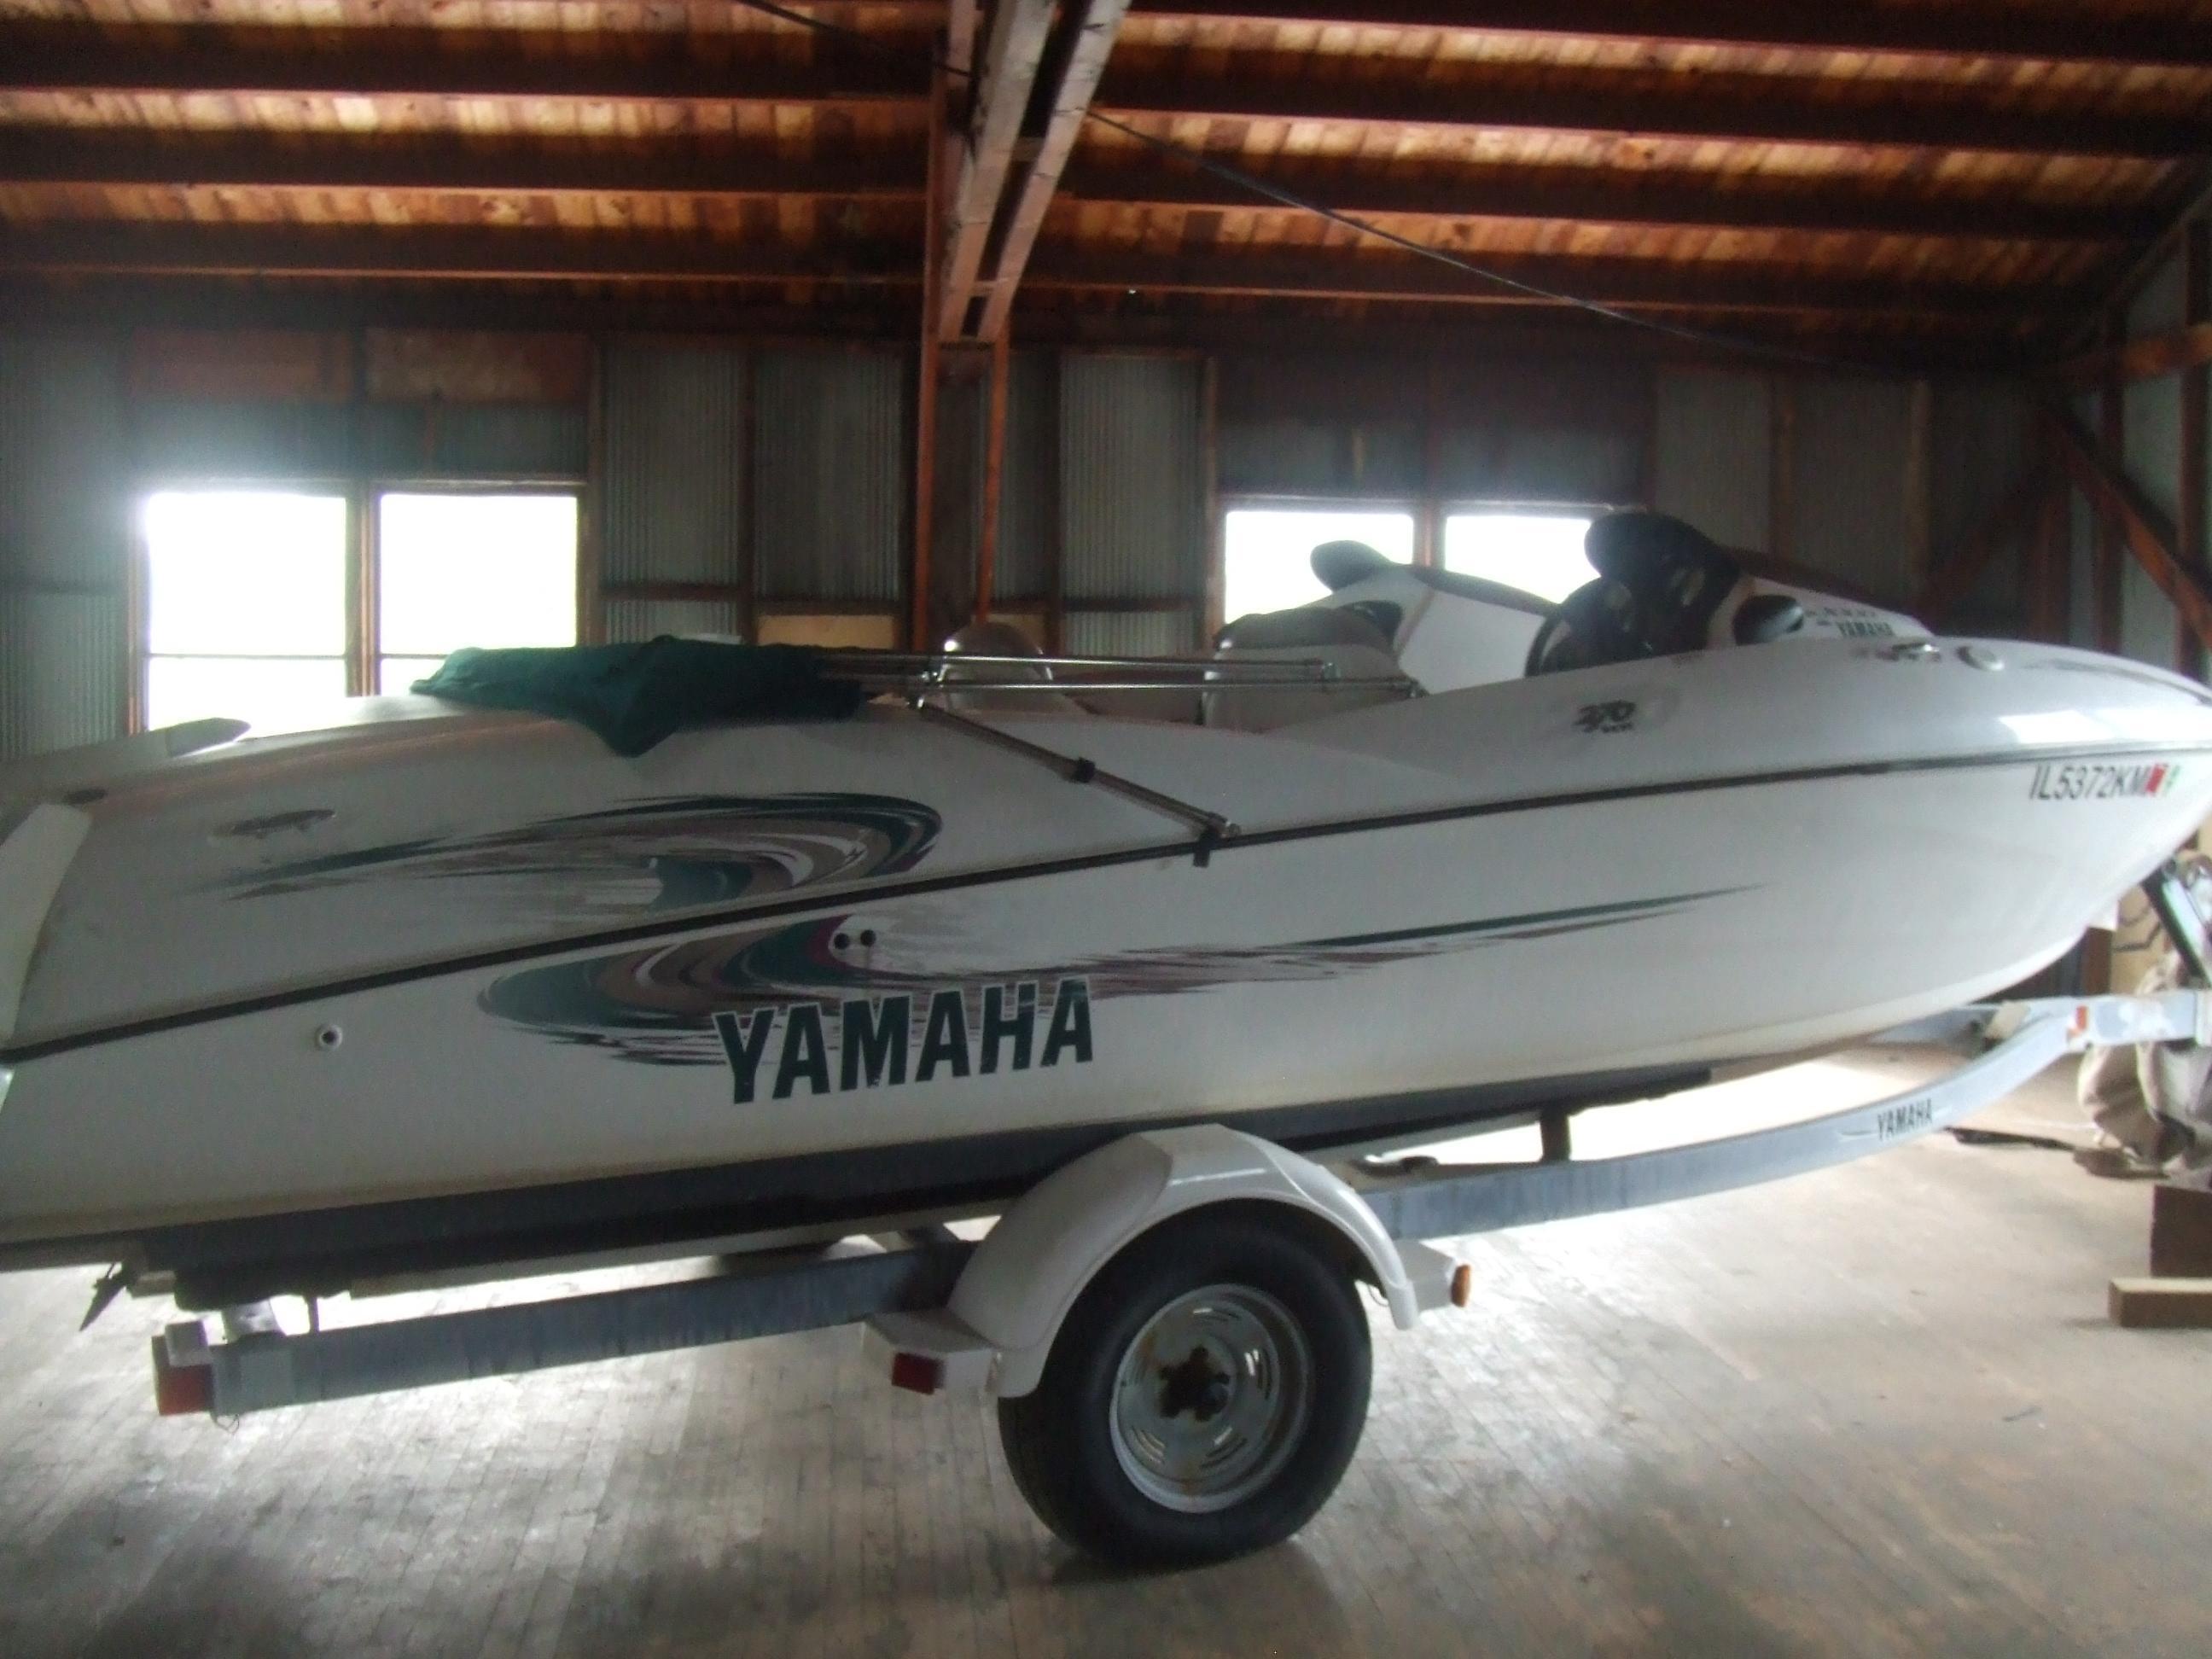 Yamaha 20' Jet Boat